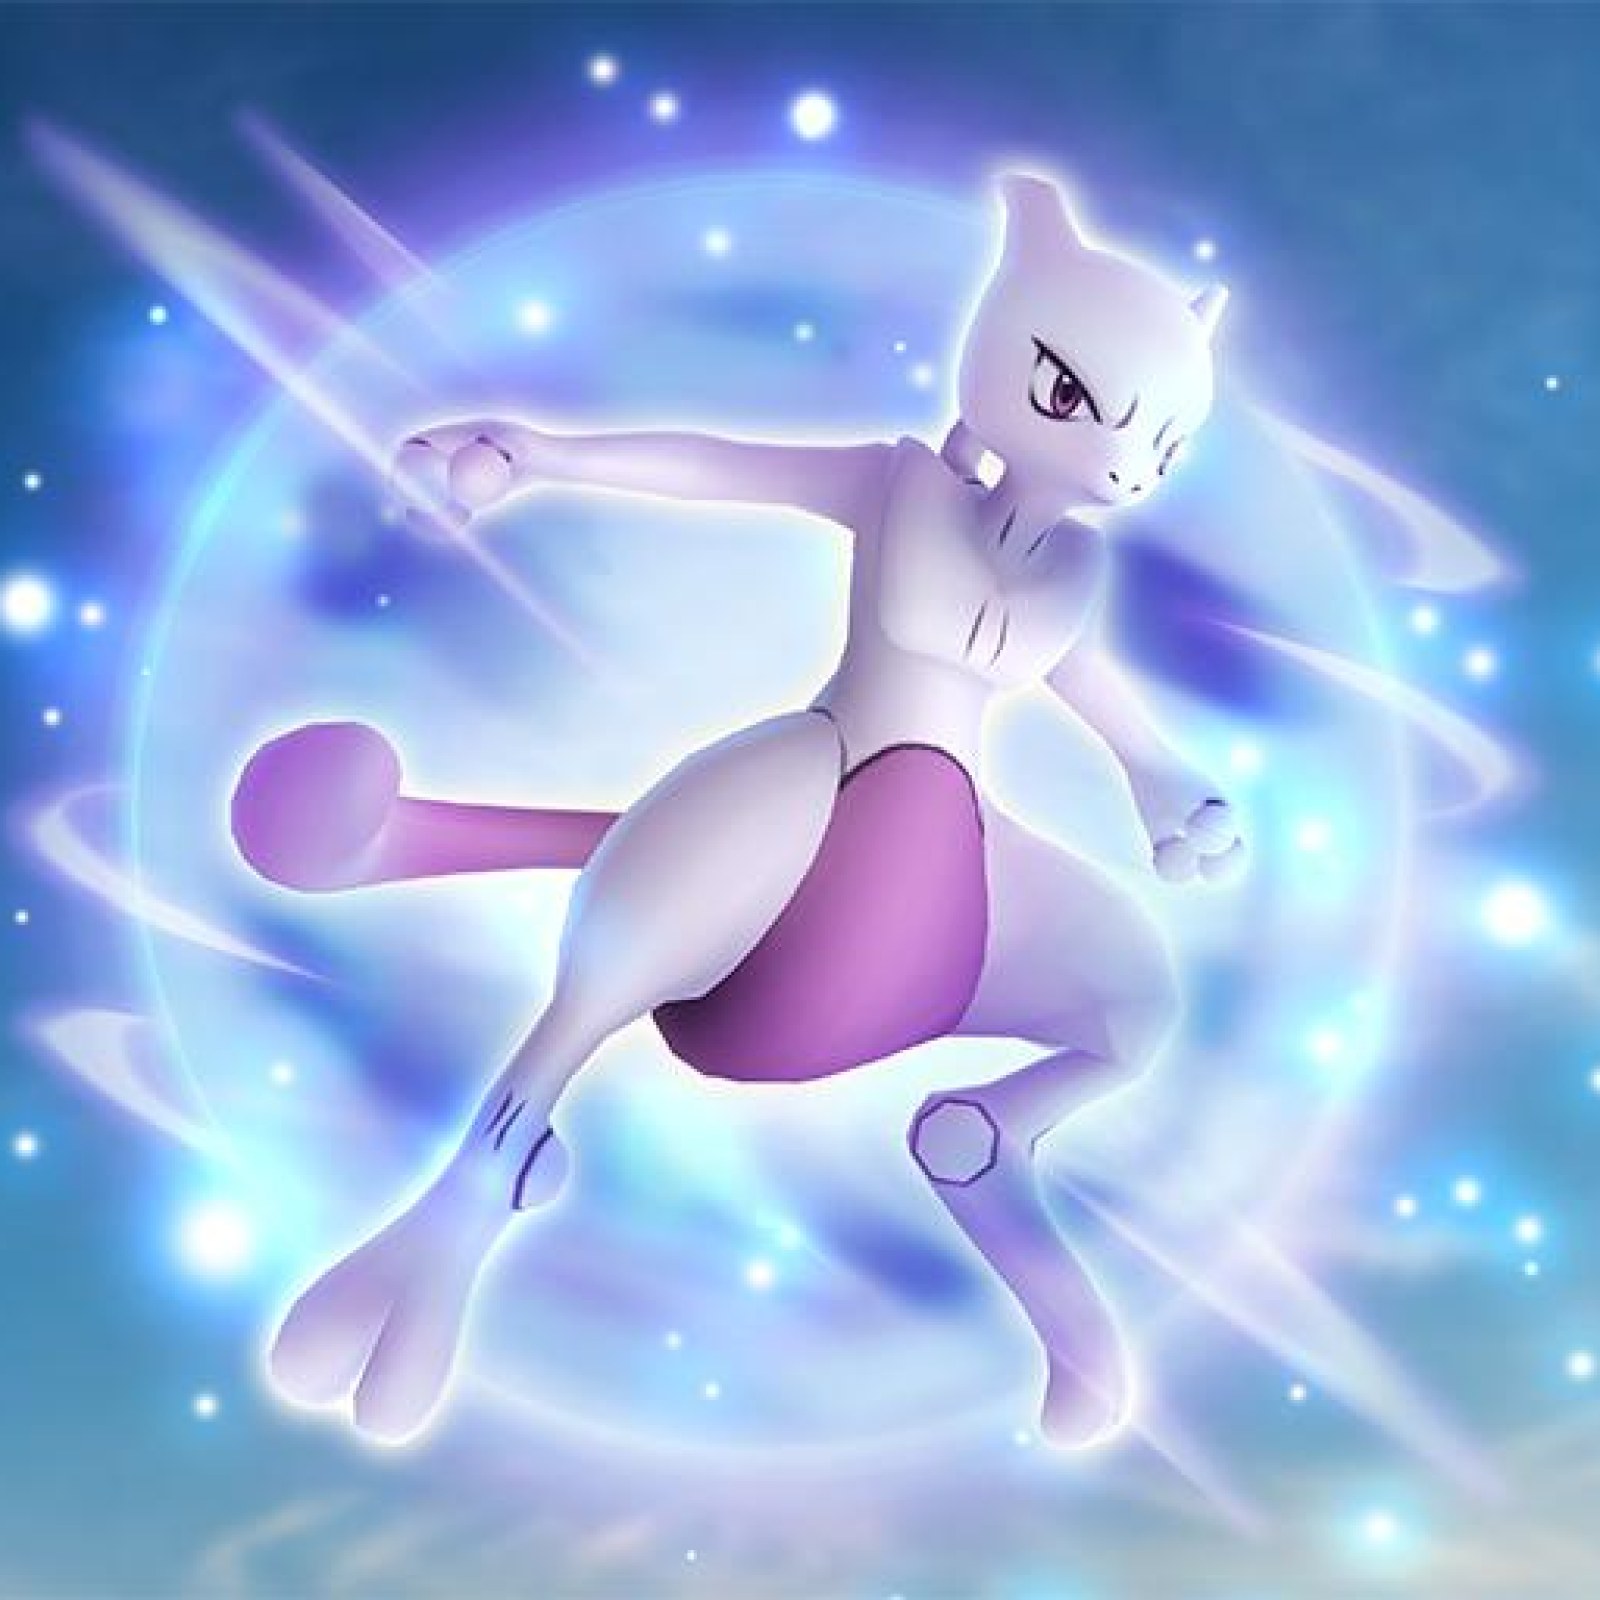 Shiny mewtwo after 77 raids 💀 : r/pokemongo